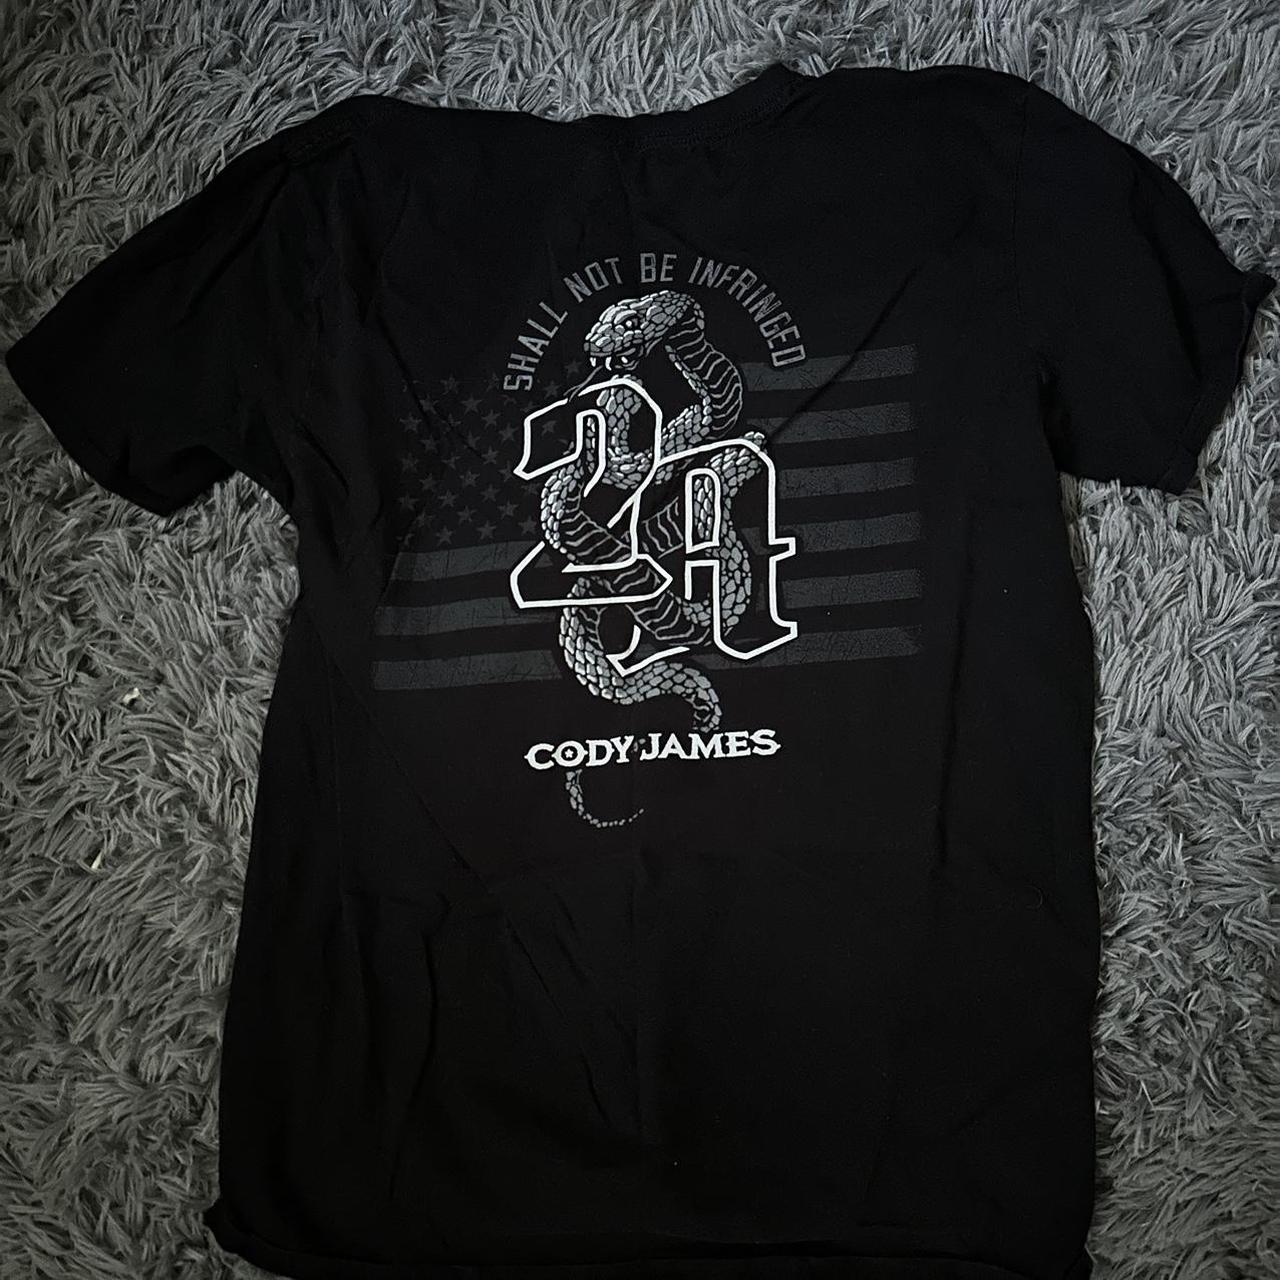 Cody James Men's Black T-shirt (2)